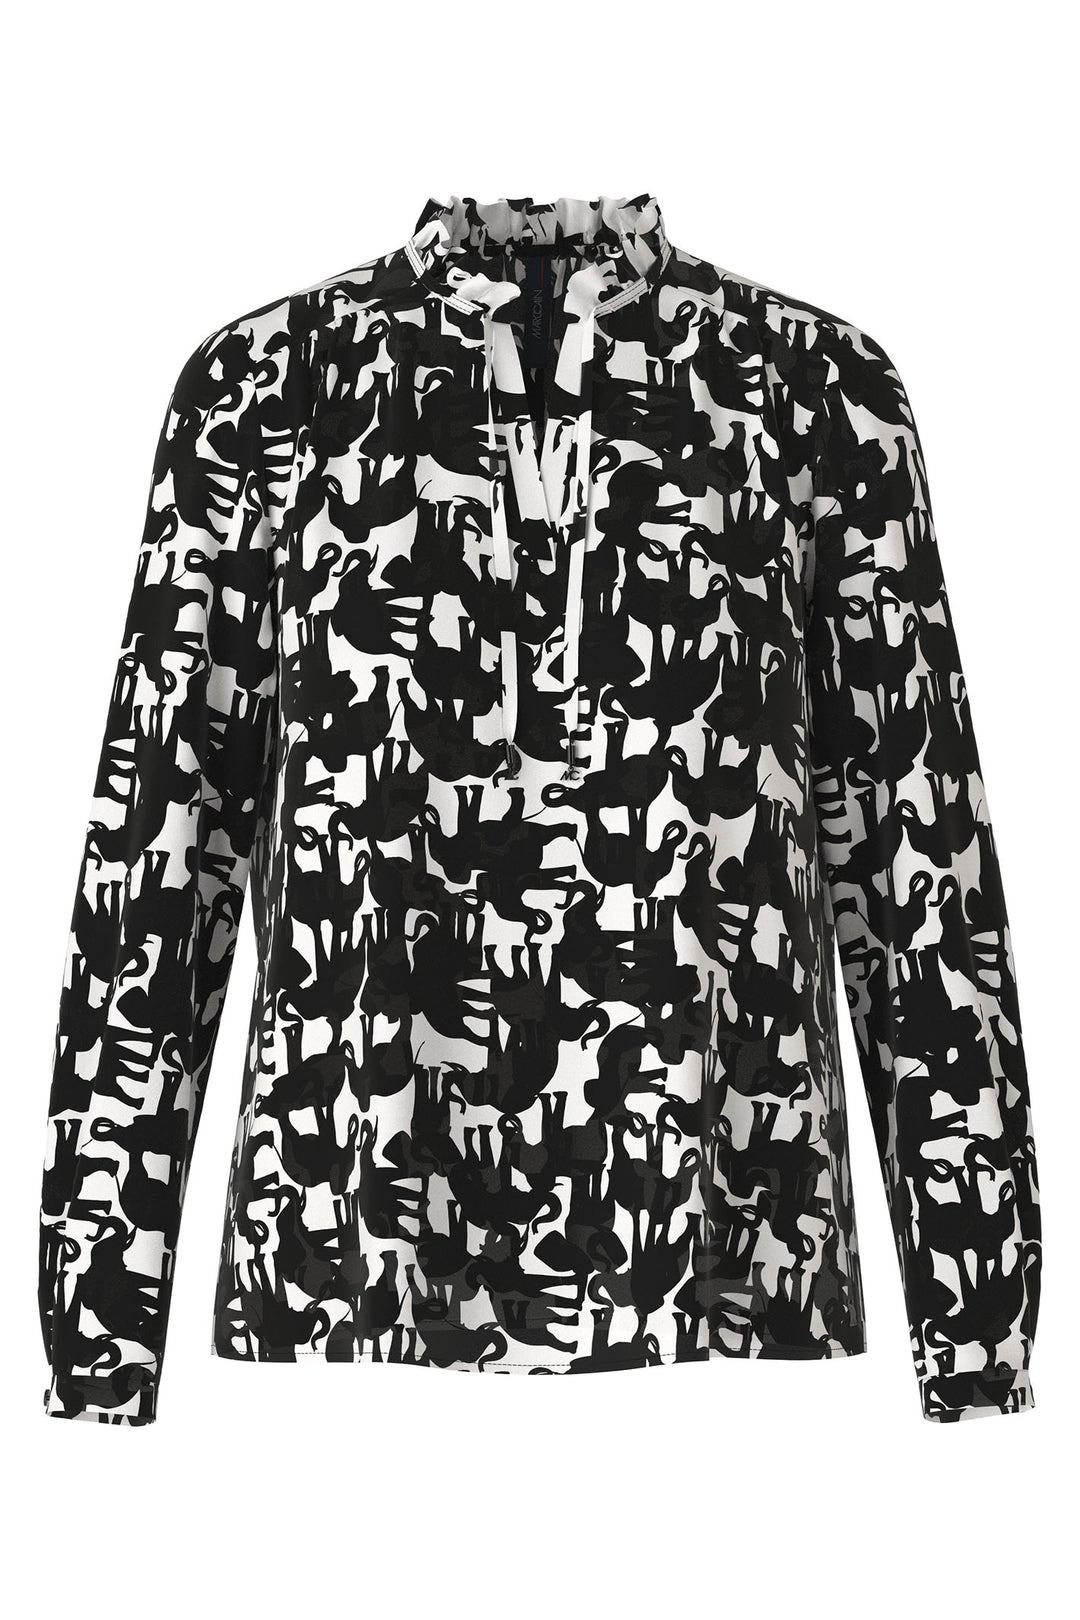 Marc Cain Collection WC 51.16 W13 910 Black White Elephant Print Blouse - Olivia Grace Fashion